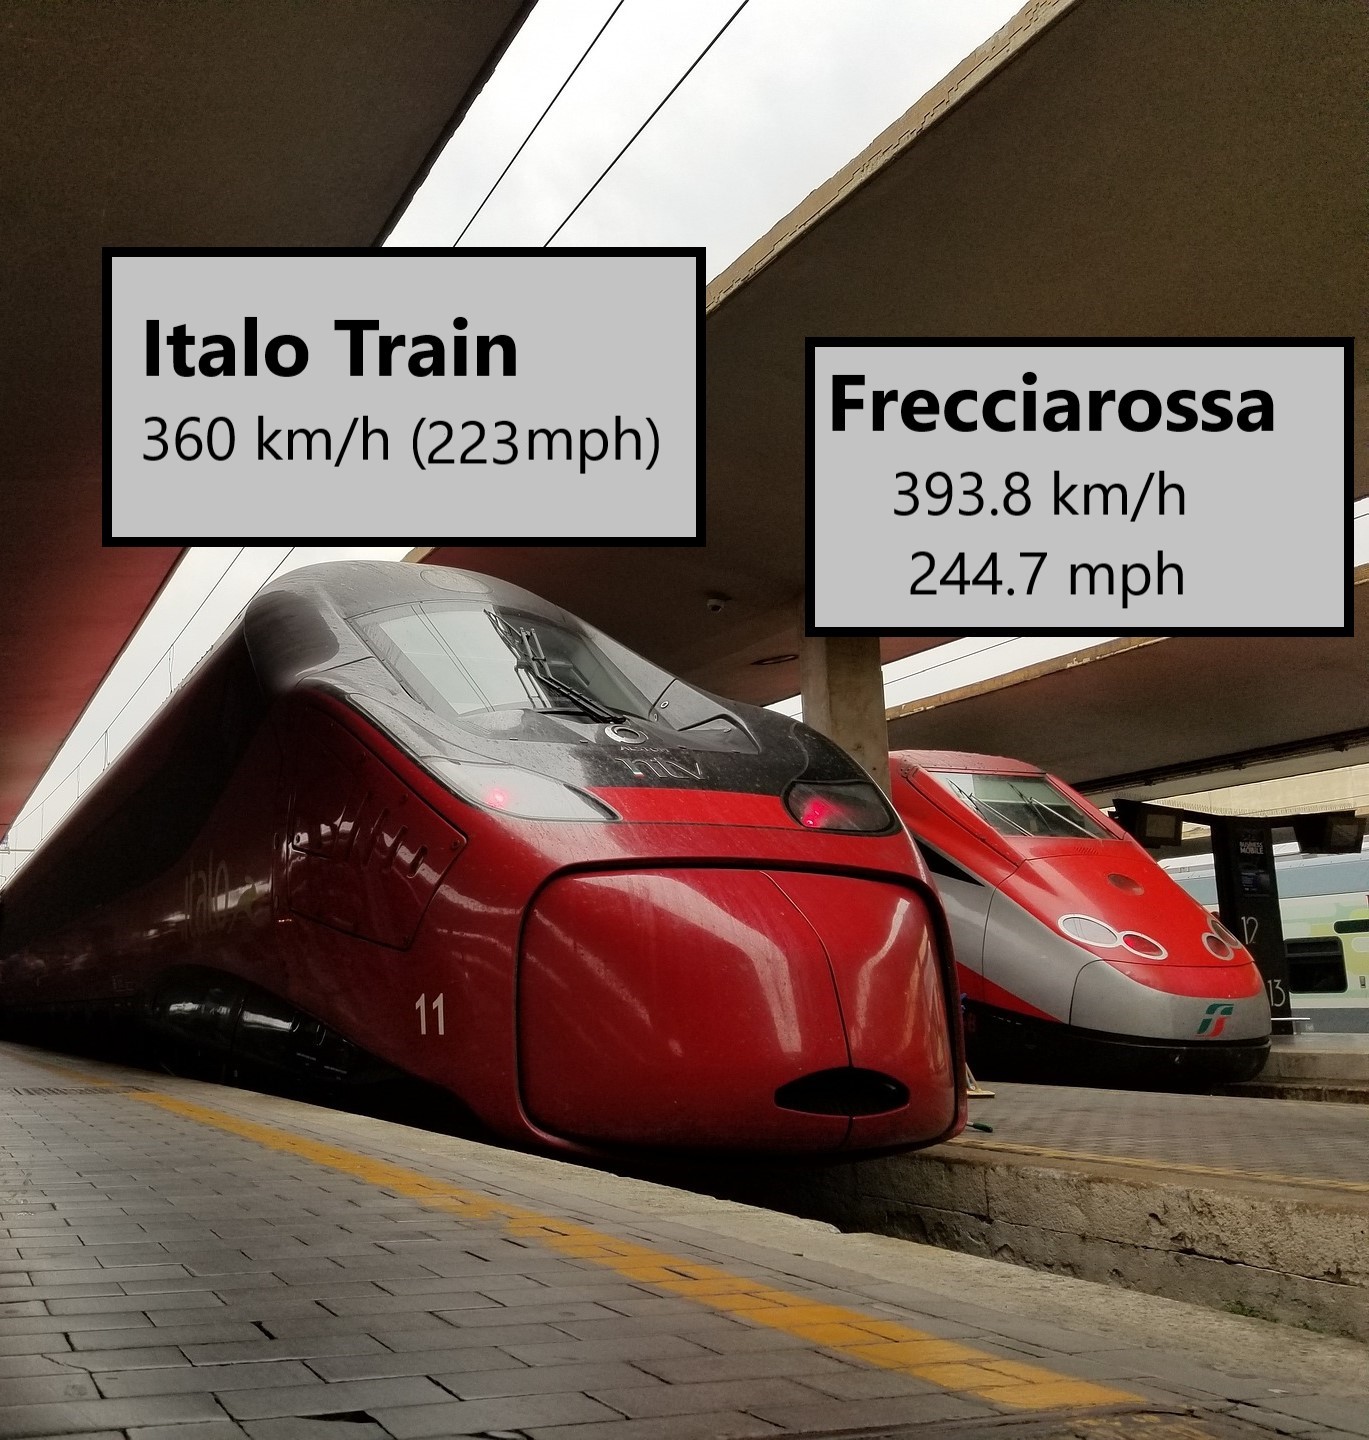 Italo and Trenitalia trains